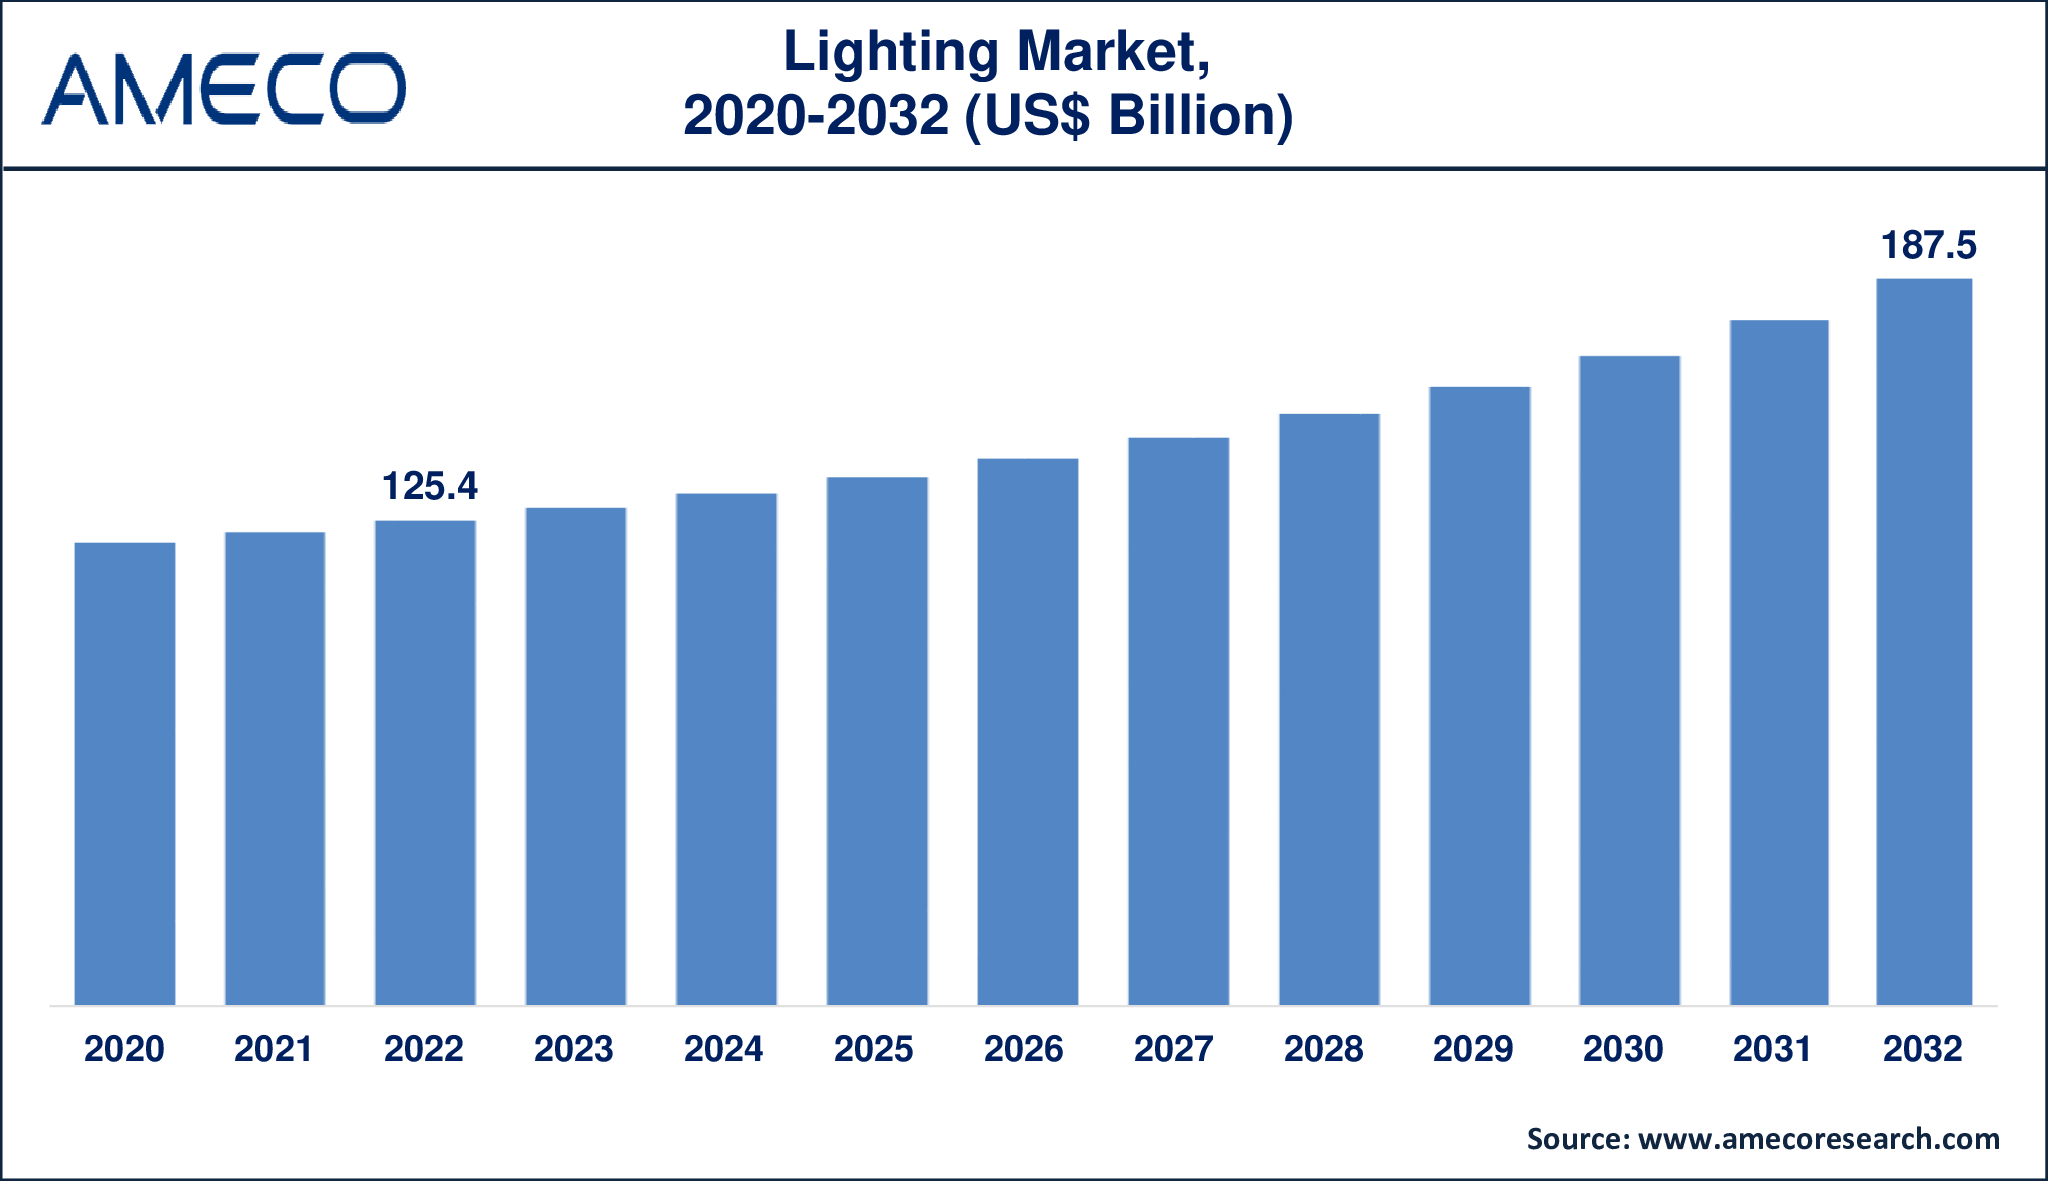 Lighting Market Dynamics